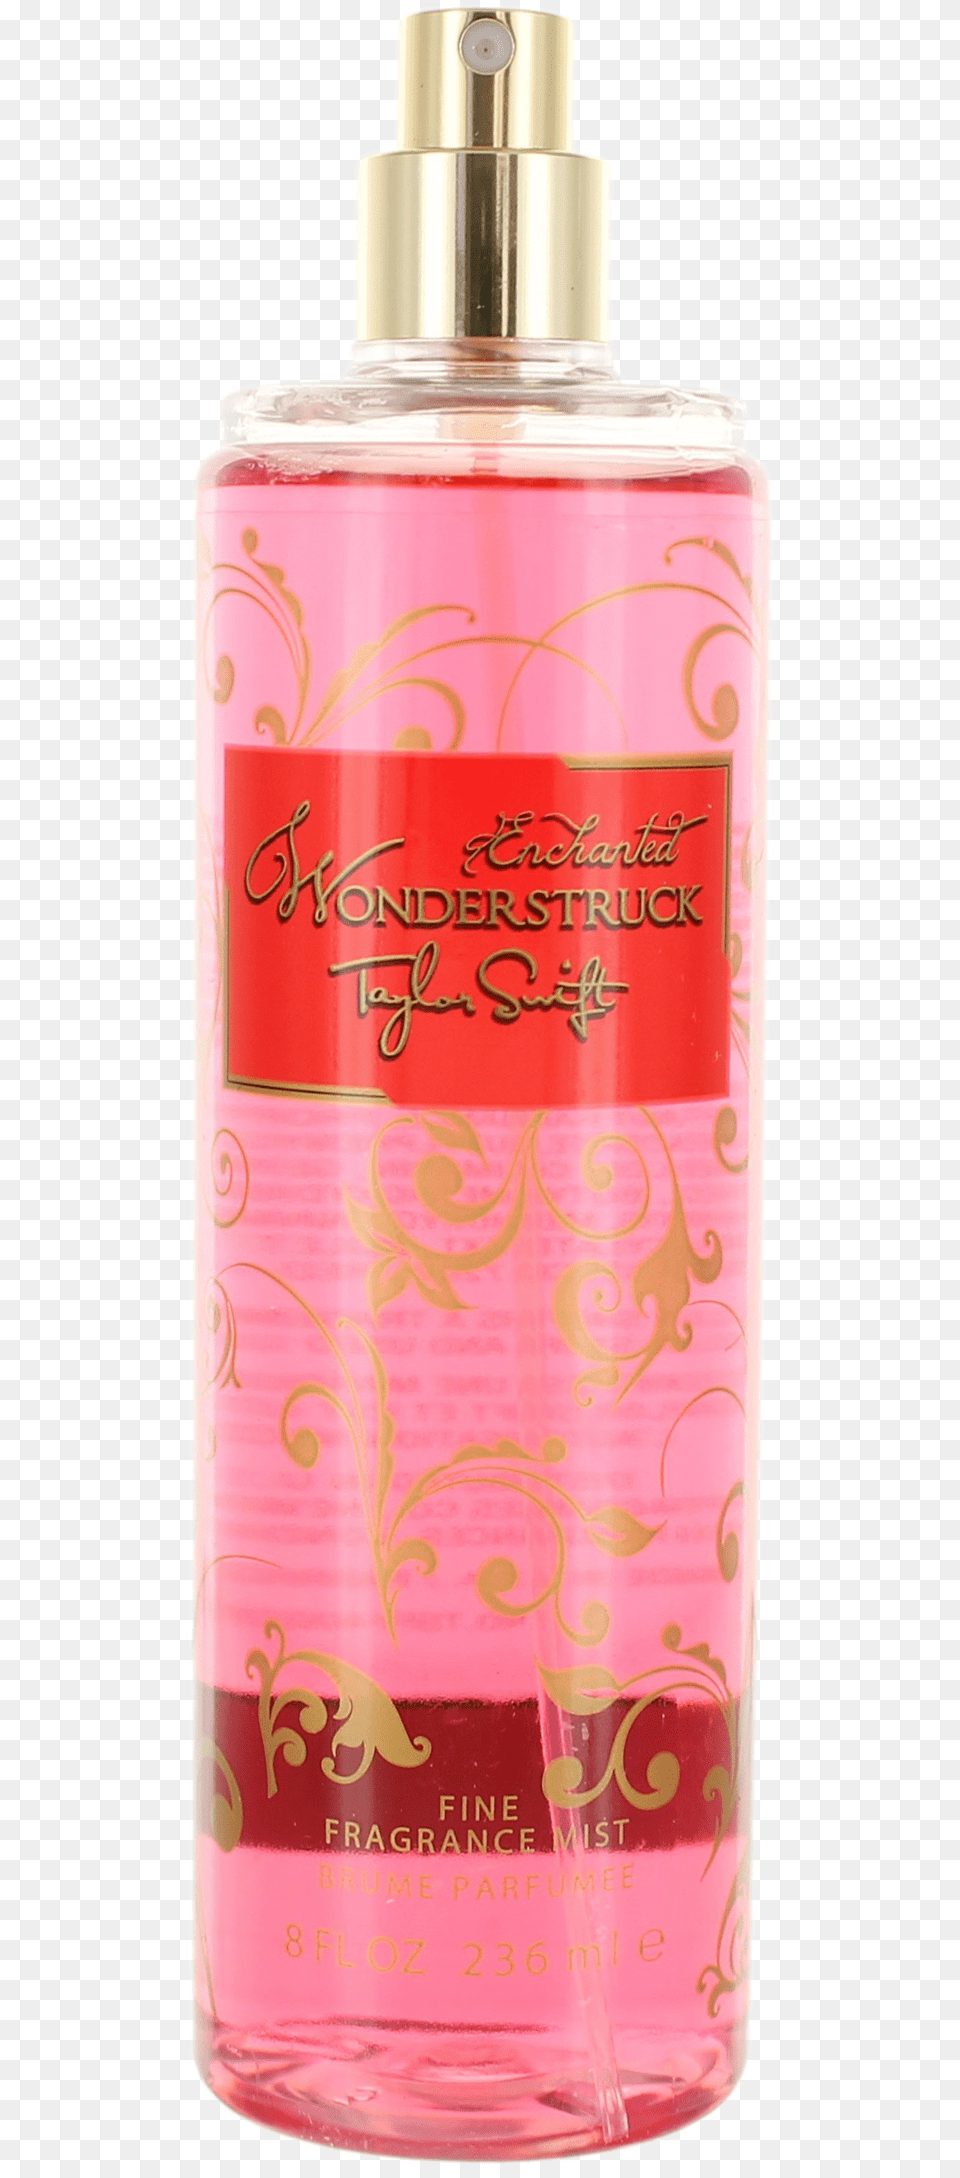 Enchanted Wonderstruck By Taylor Swift For Women Body Bottle, Cosmetics, Perfume Png